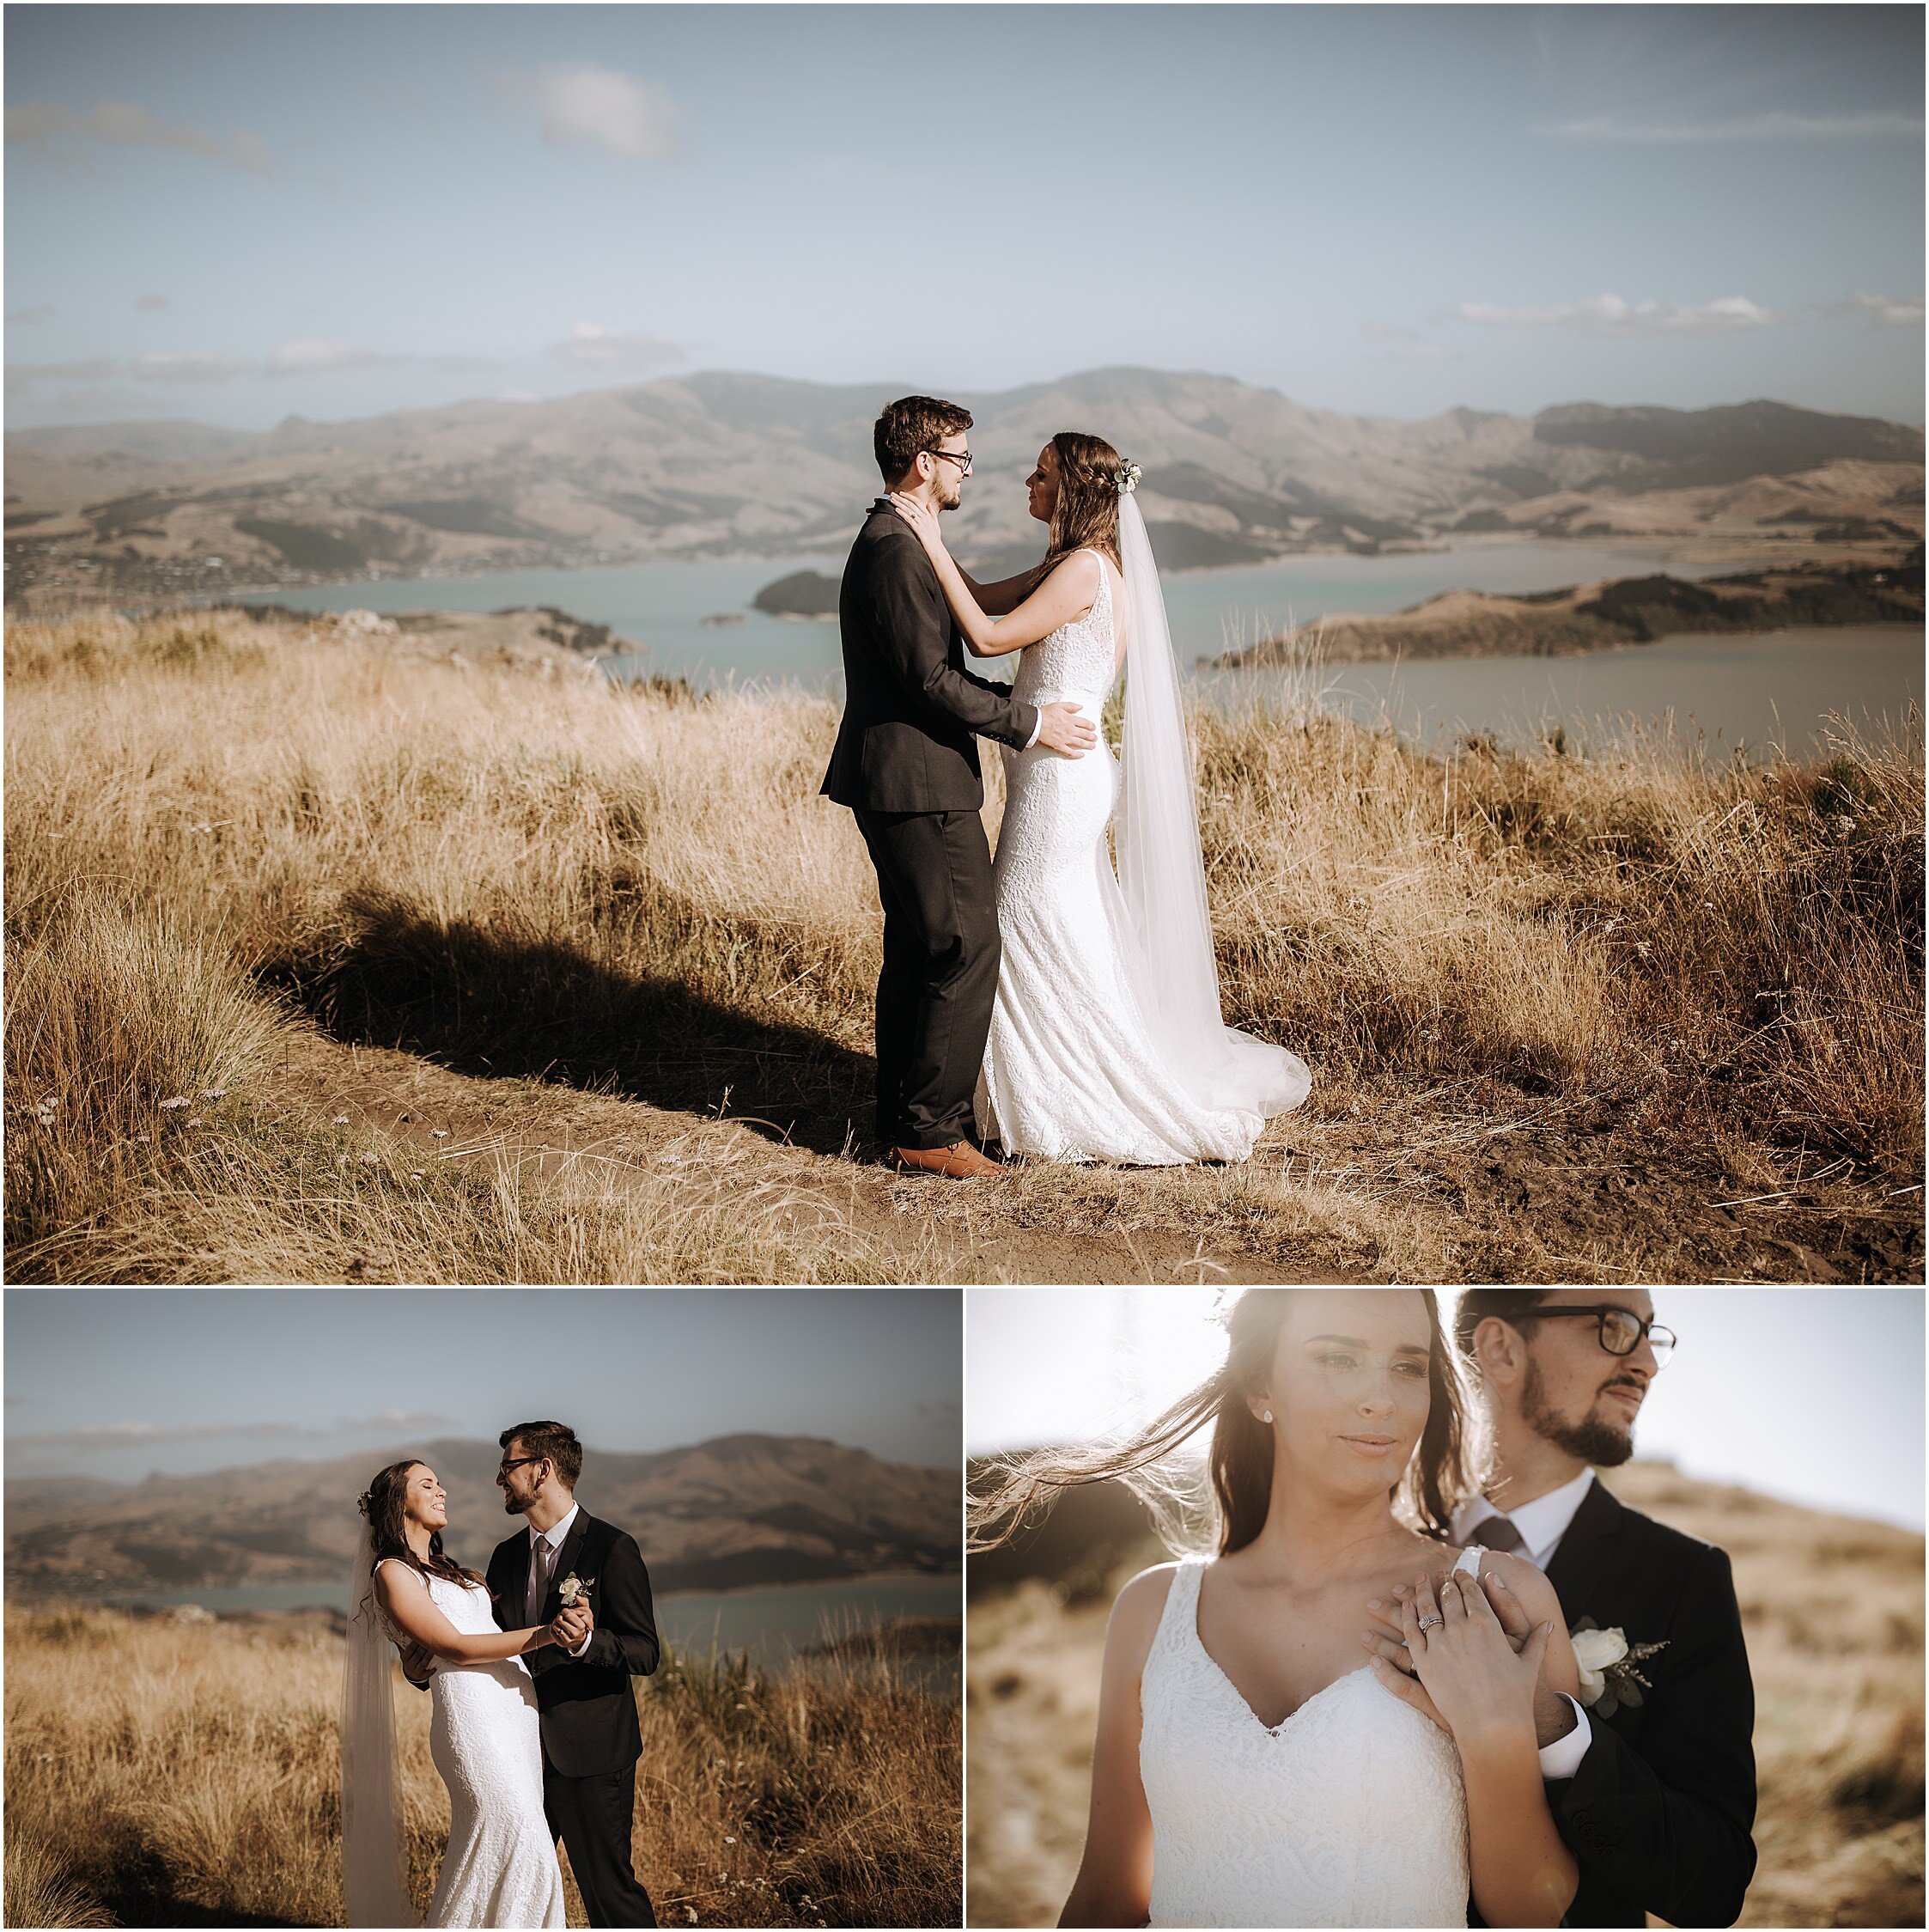 Zanda+Auckland+wedding+photographer+retro+car+Port+Hills+fairytale+garden+venue+Christchurch+South+Island+New+Zealand_42.jpeg